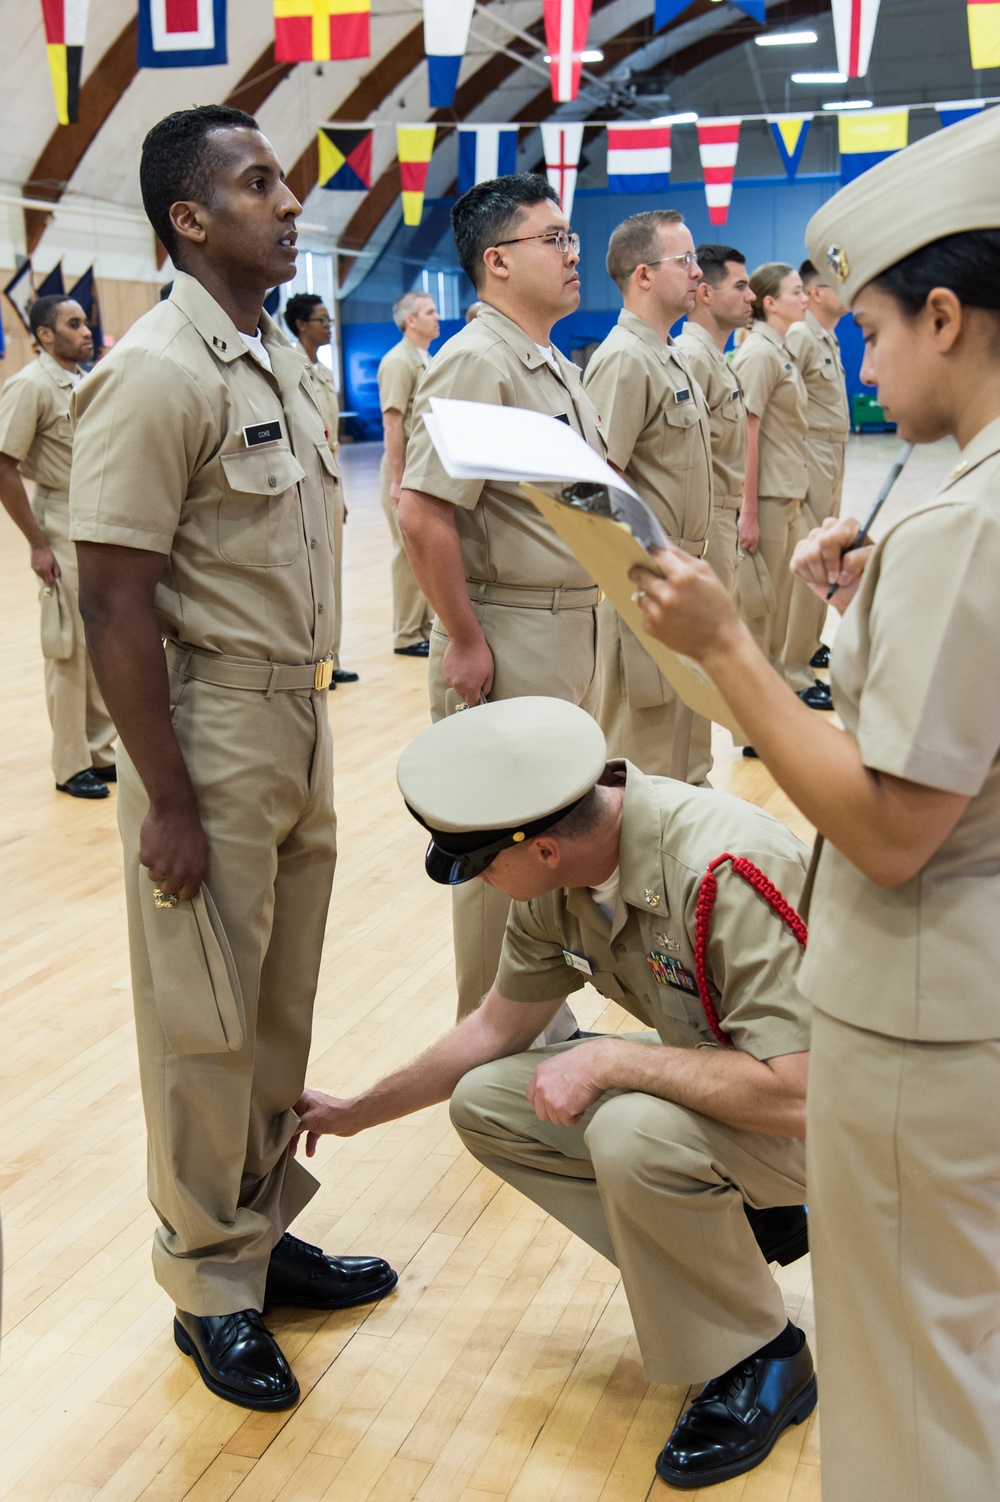 191003-N-TE695-0001 NEWPORT, R.I. (Oct. 3, 2019) -- Navy ODS conduct khaki uniform inspections